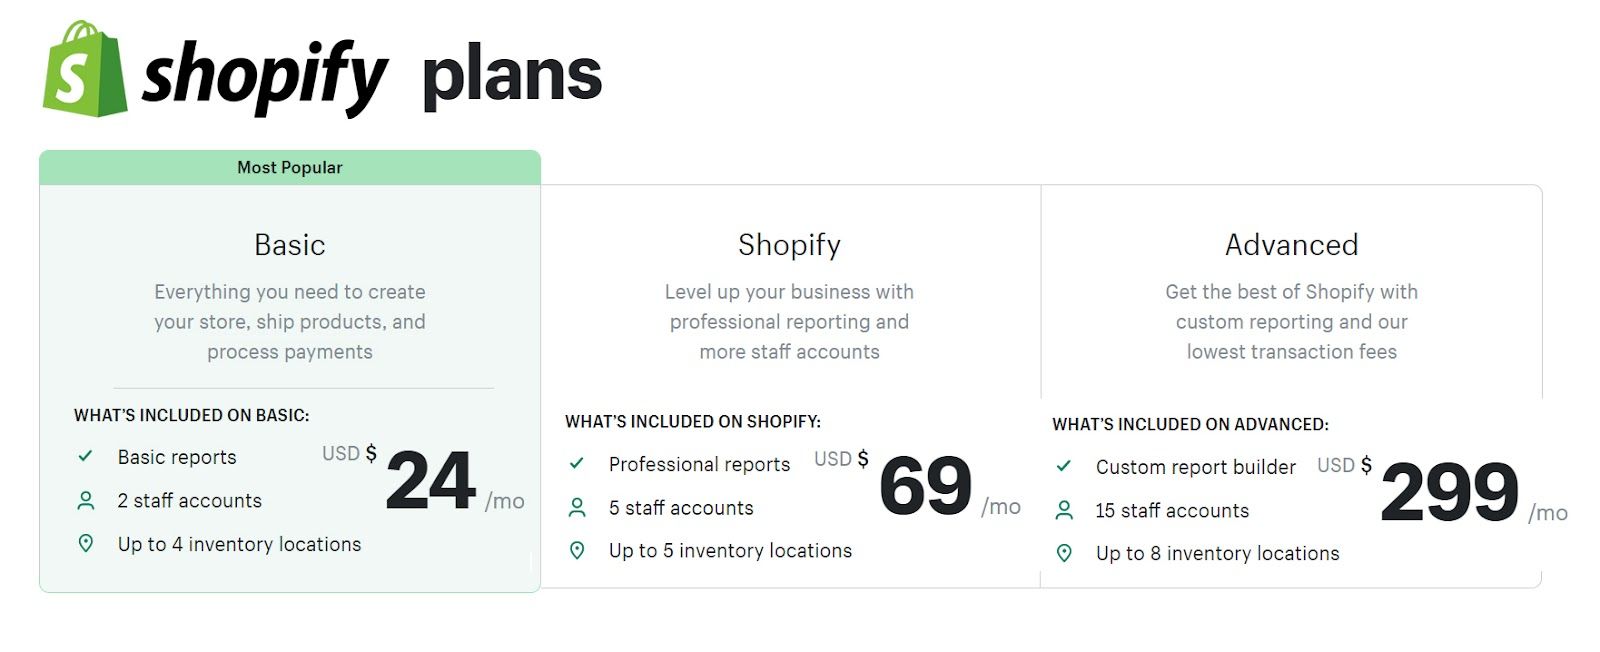 Shopify ecommerce platform plans